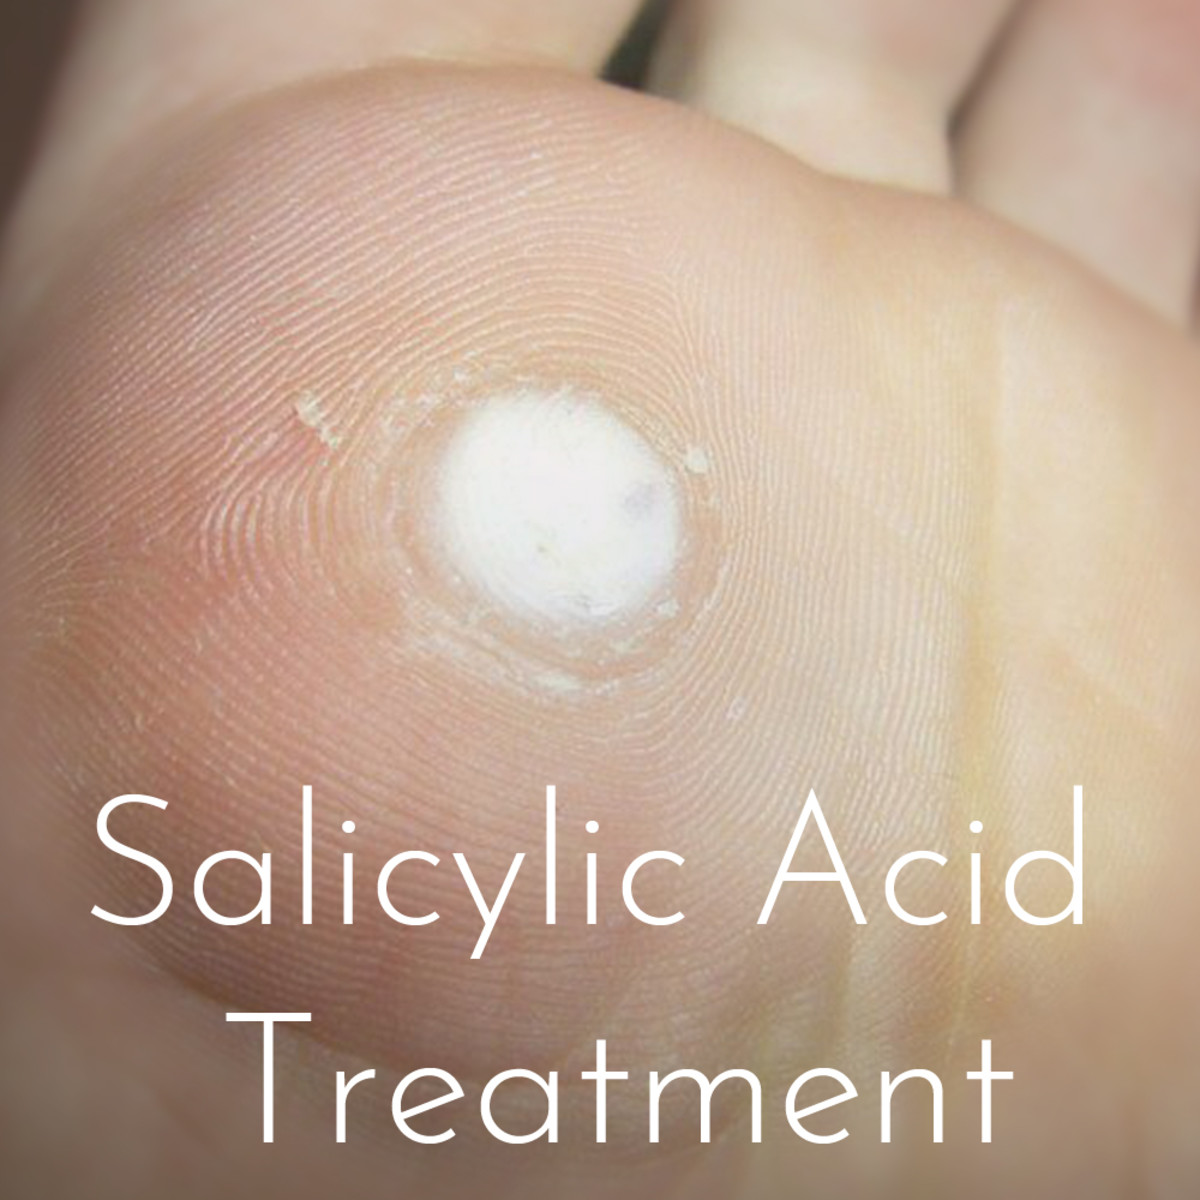 Plantar wart after treatment with salicylic acid.